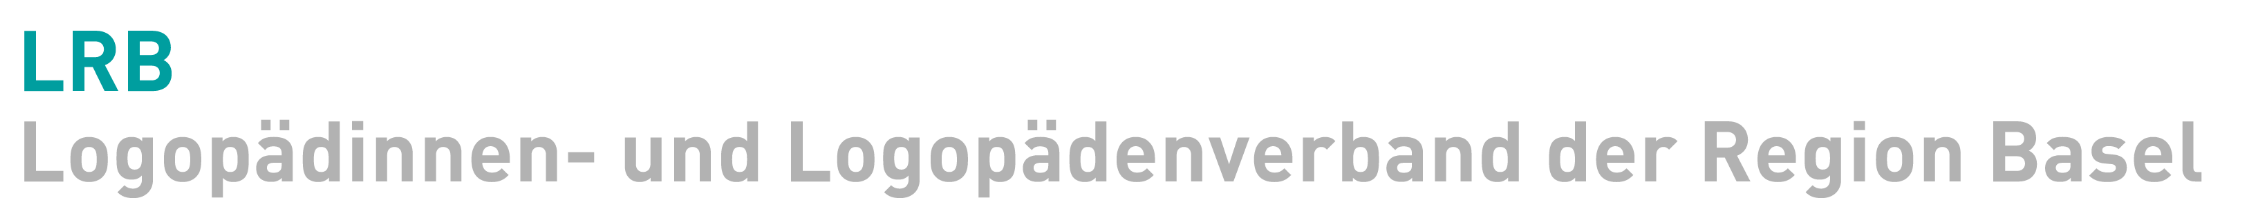 Logopädinnen und Logopädenverband der Region Basel LRB Logo